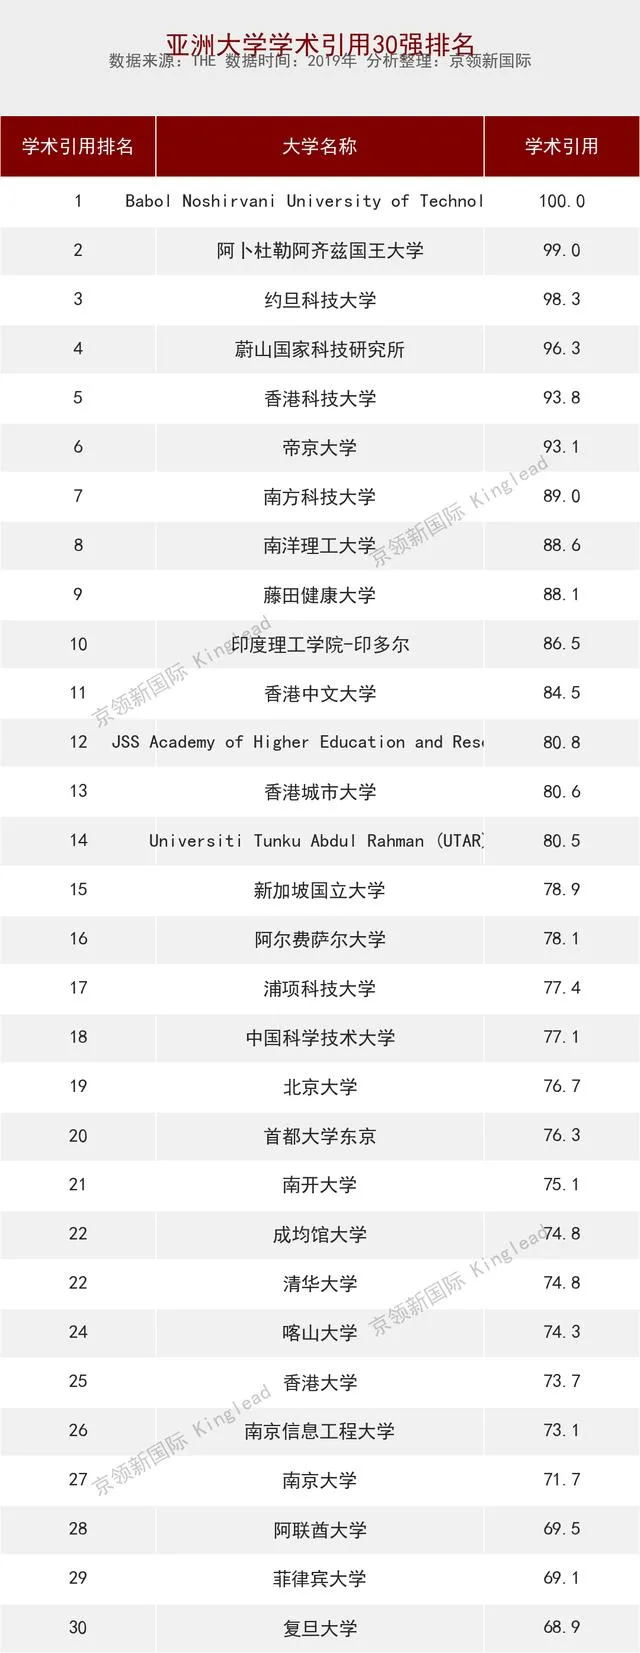 THE亚洲排名，香港科技大学排名超越南洋理工，中国的骄傲！